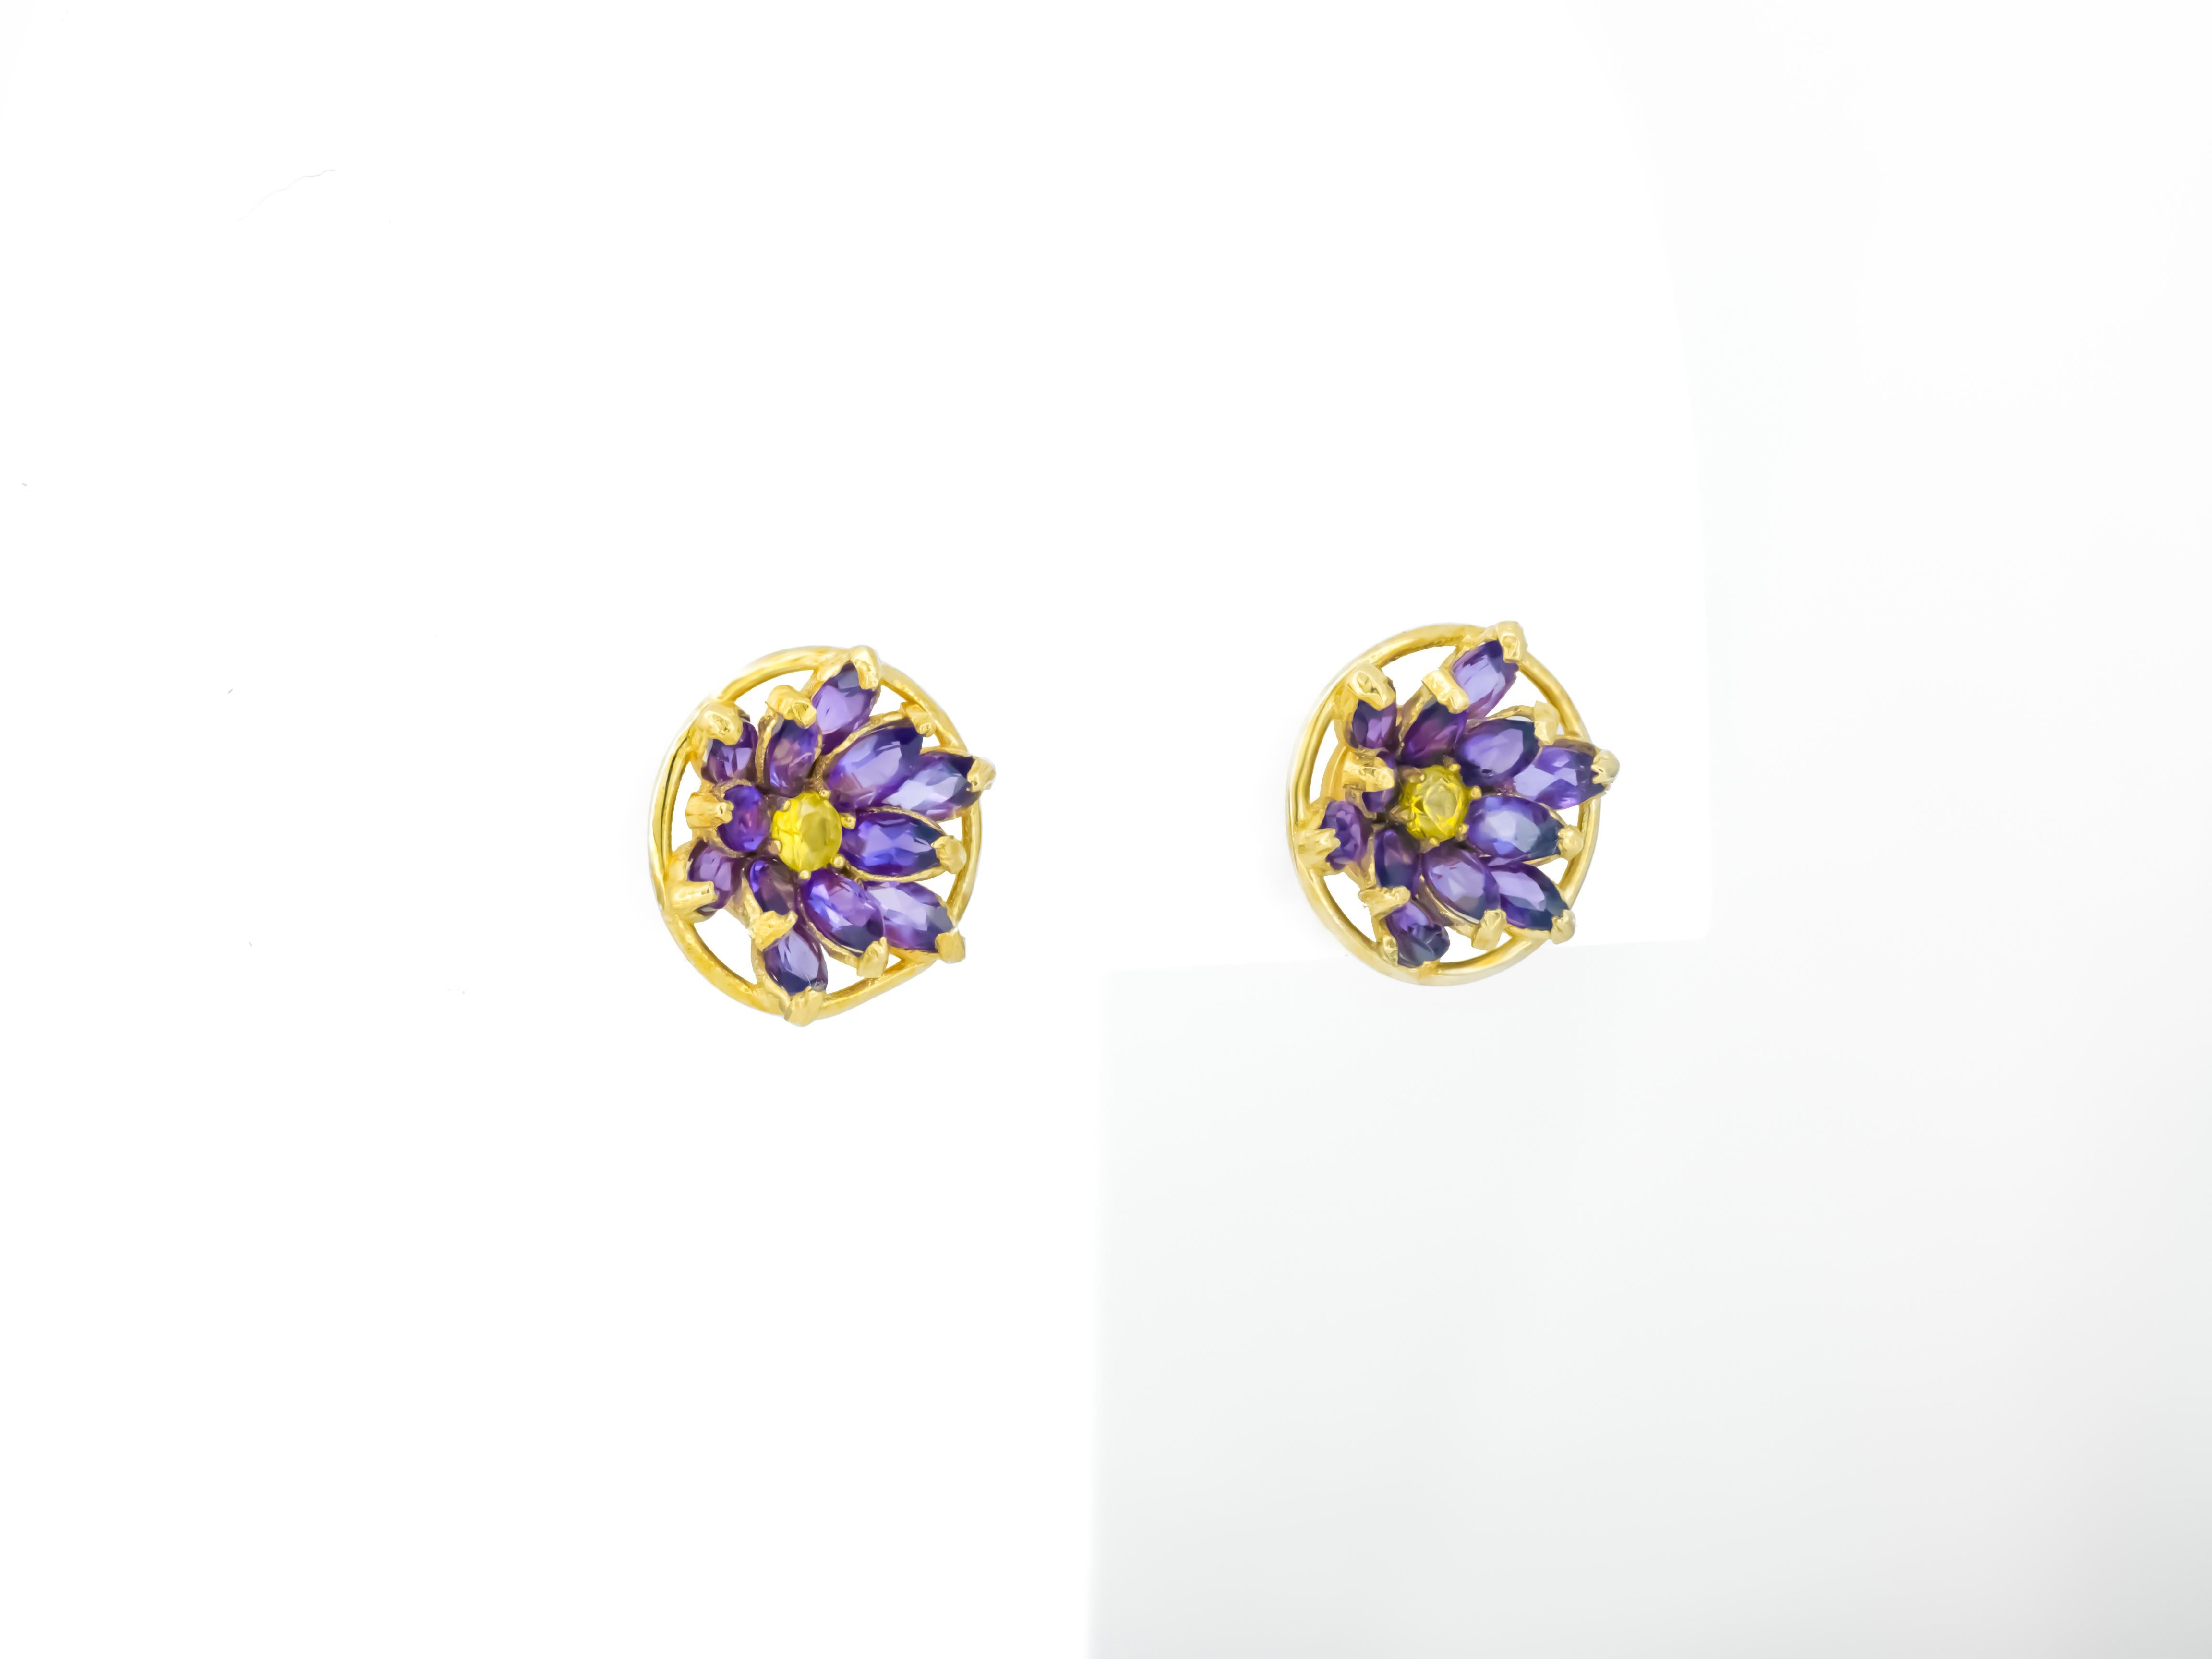 Lotus Flower Earrings Studs in 14k Gold, Amethyst and Sapphires Earrings For Sale 5